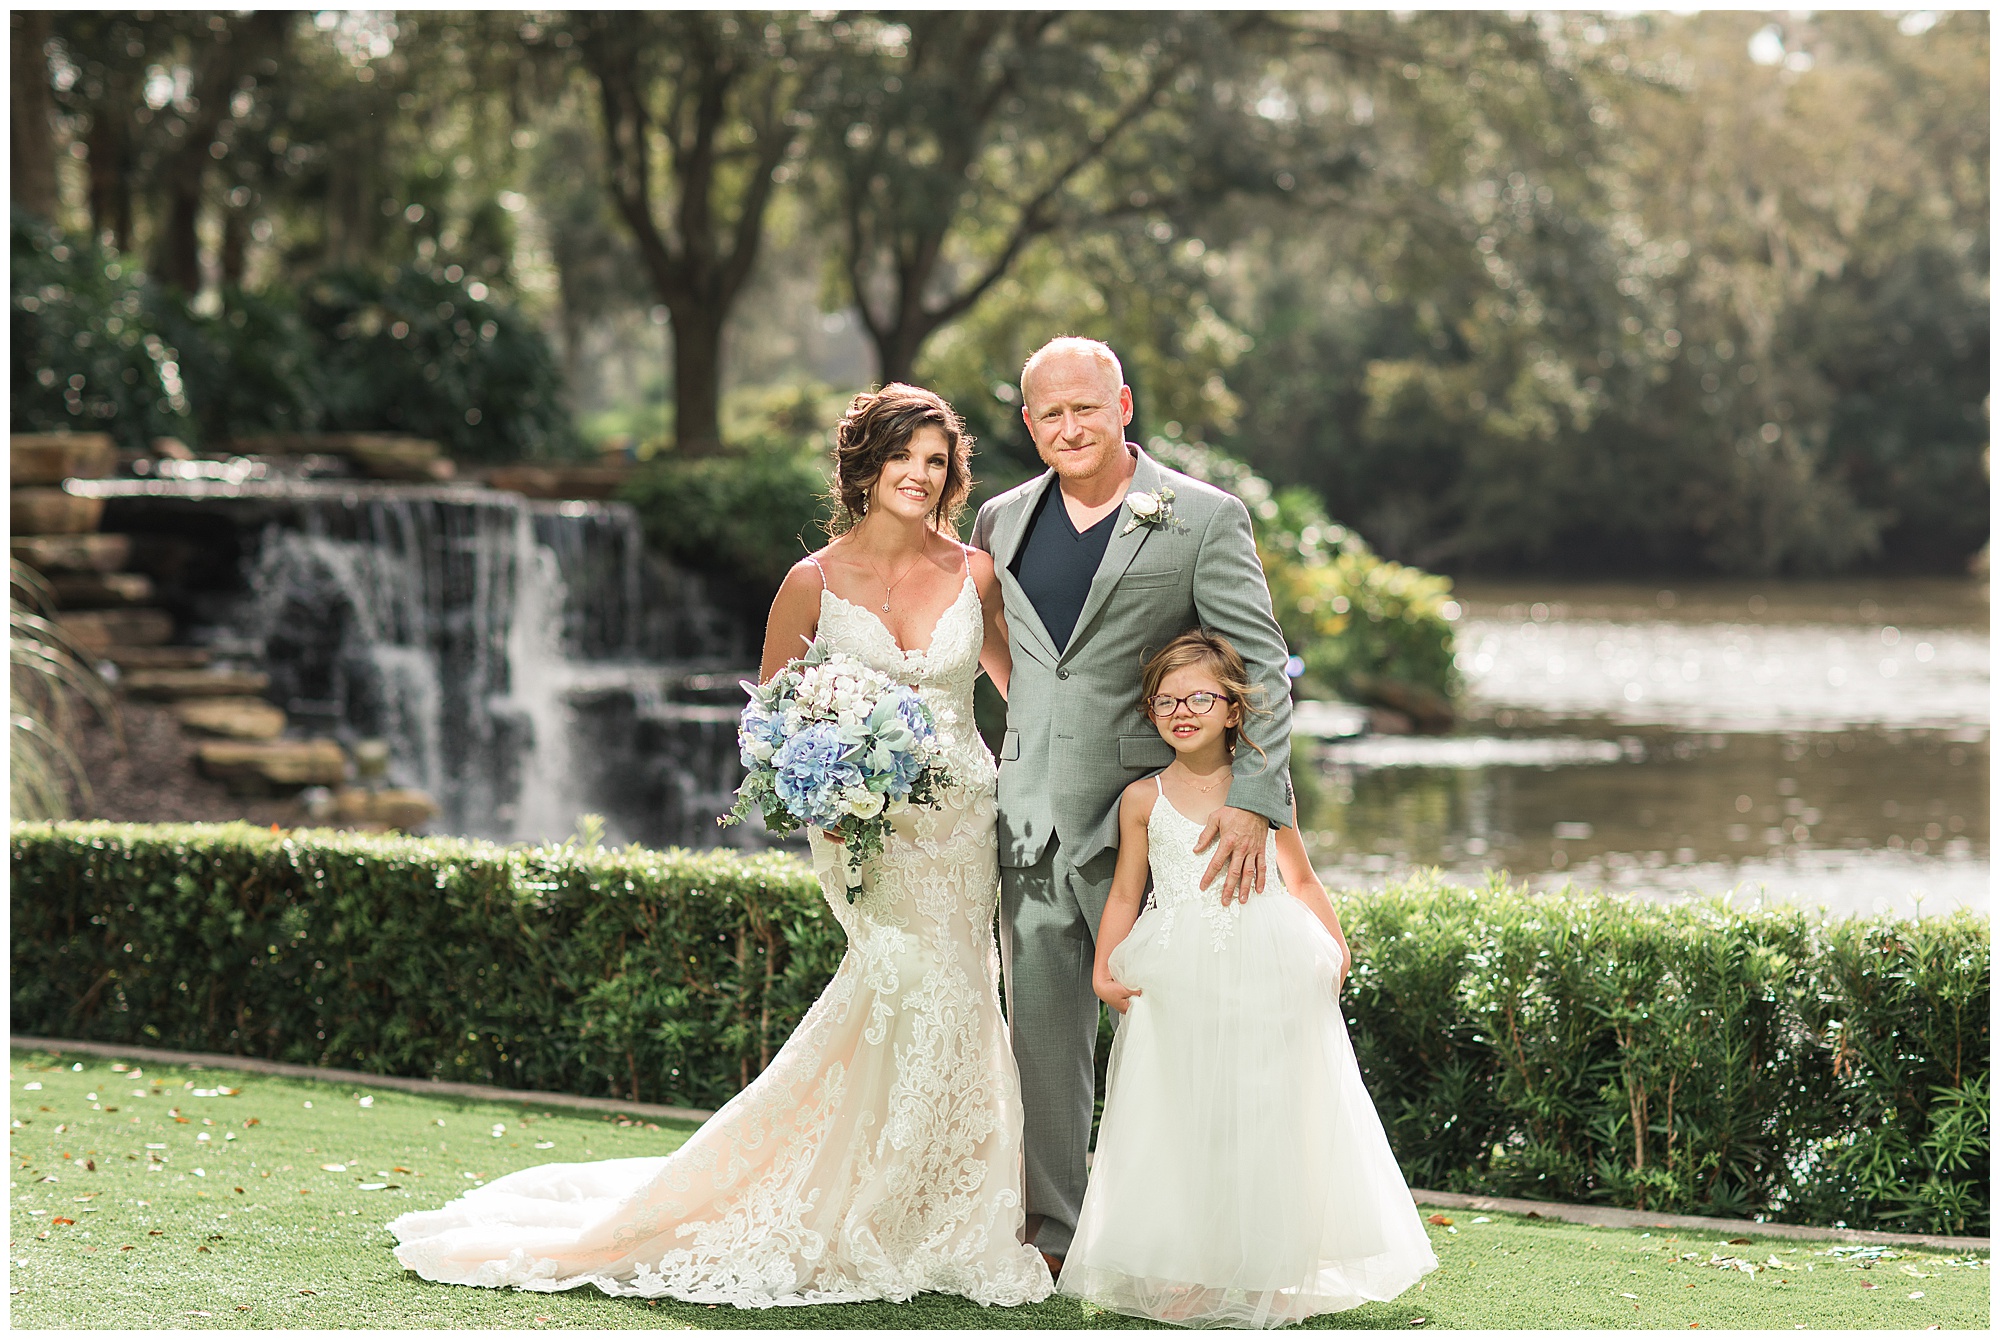 Kelley Stinson Photography,Jacksonville, FL Wedding,Sawgrass Marriott Wedding,Florida Wedding Photographer,